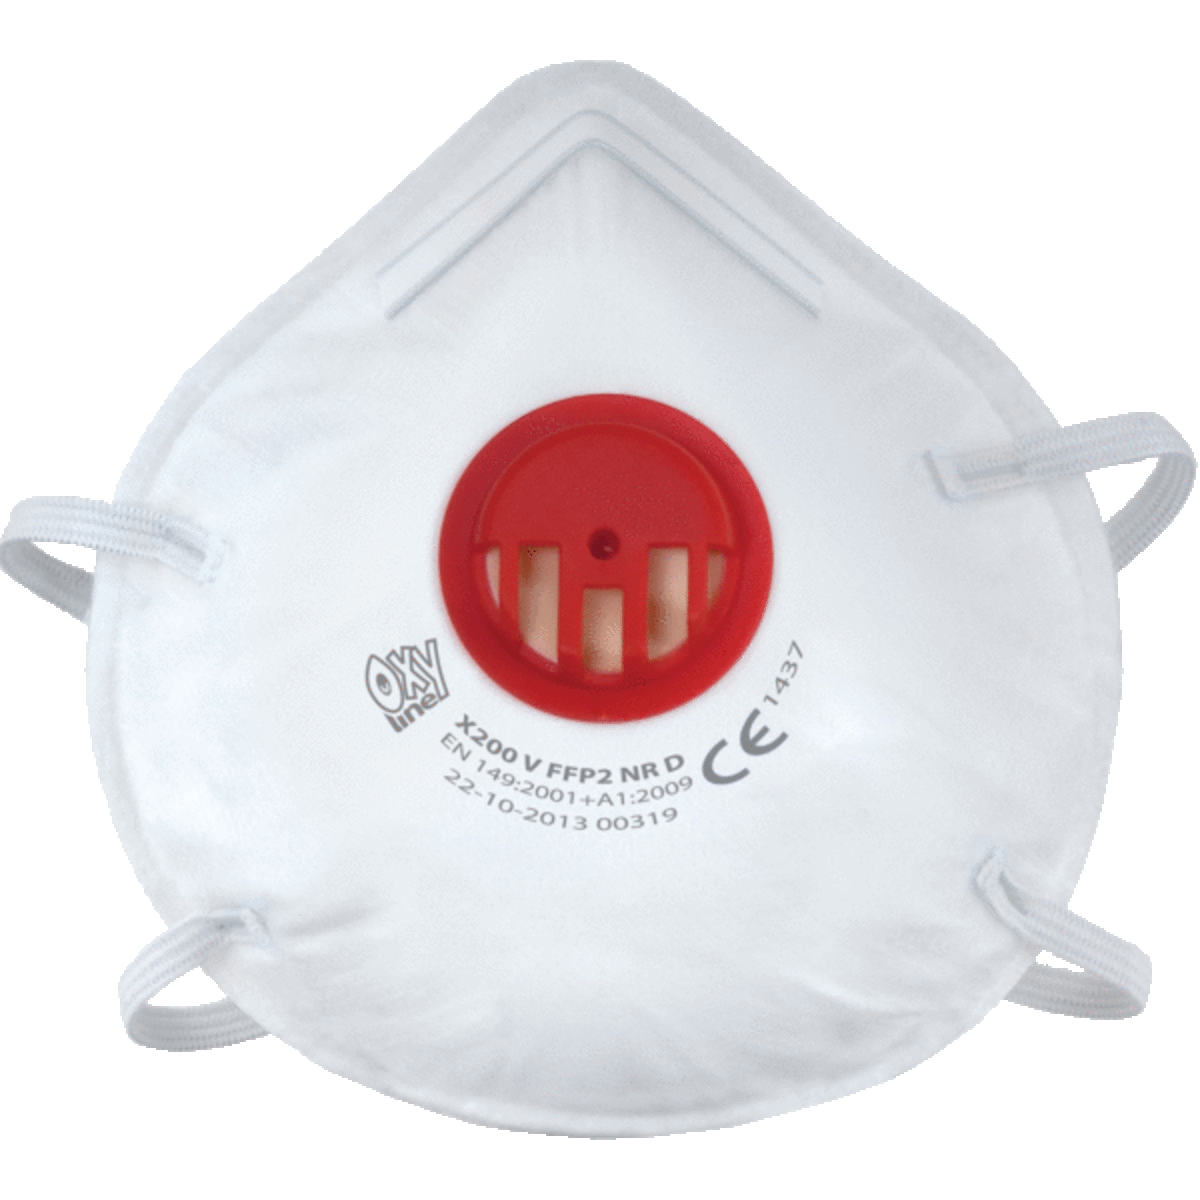 Boîte de 10 masques respiratoires àcoque et valve FFP2